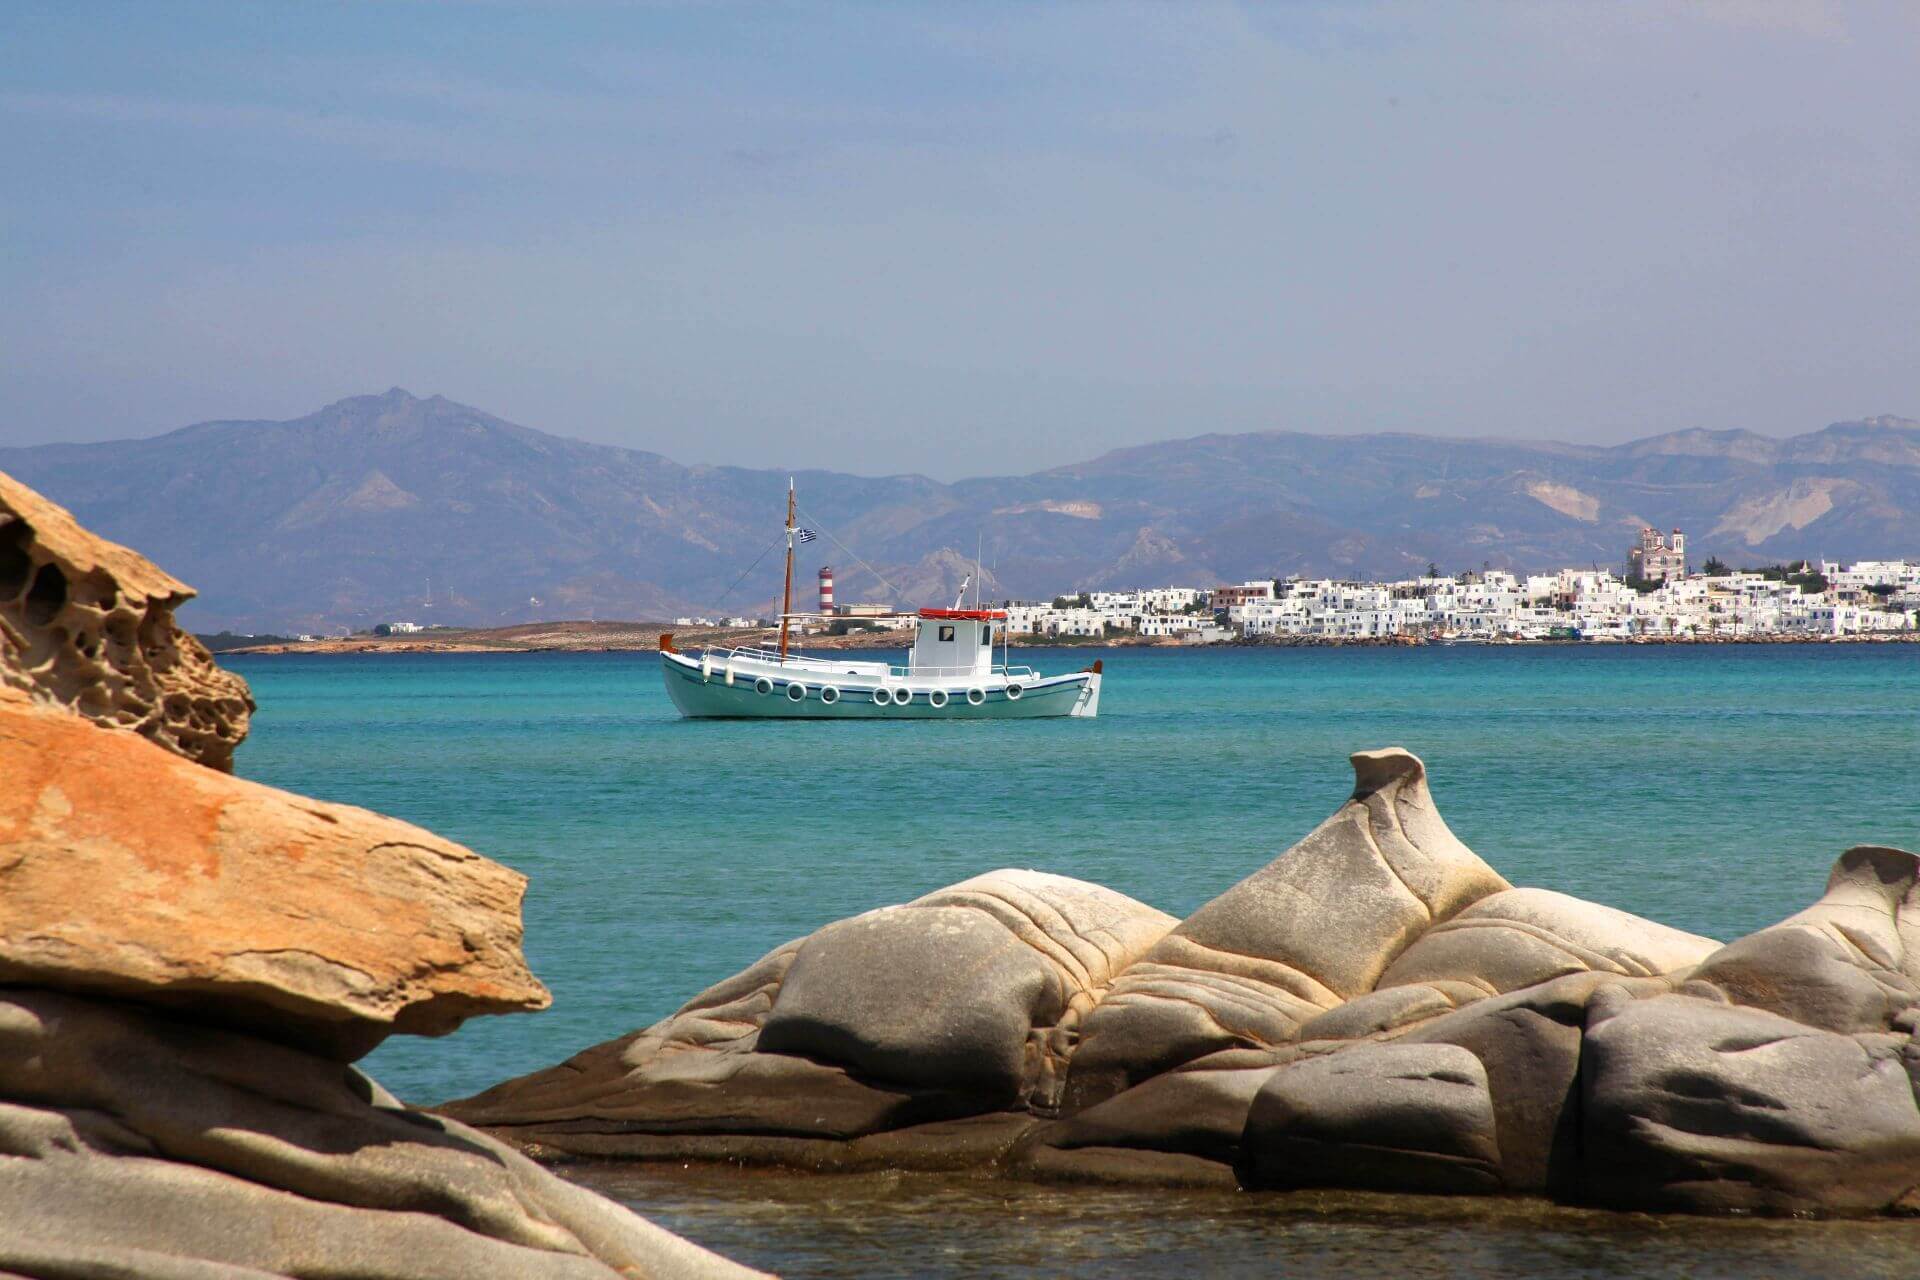 Cyclades Greece: The beach of Kolympithres on Paros island